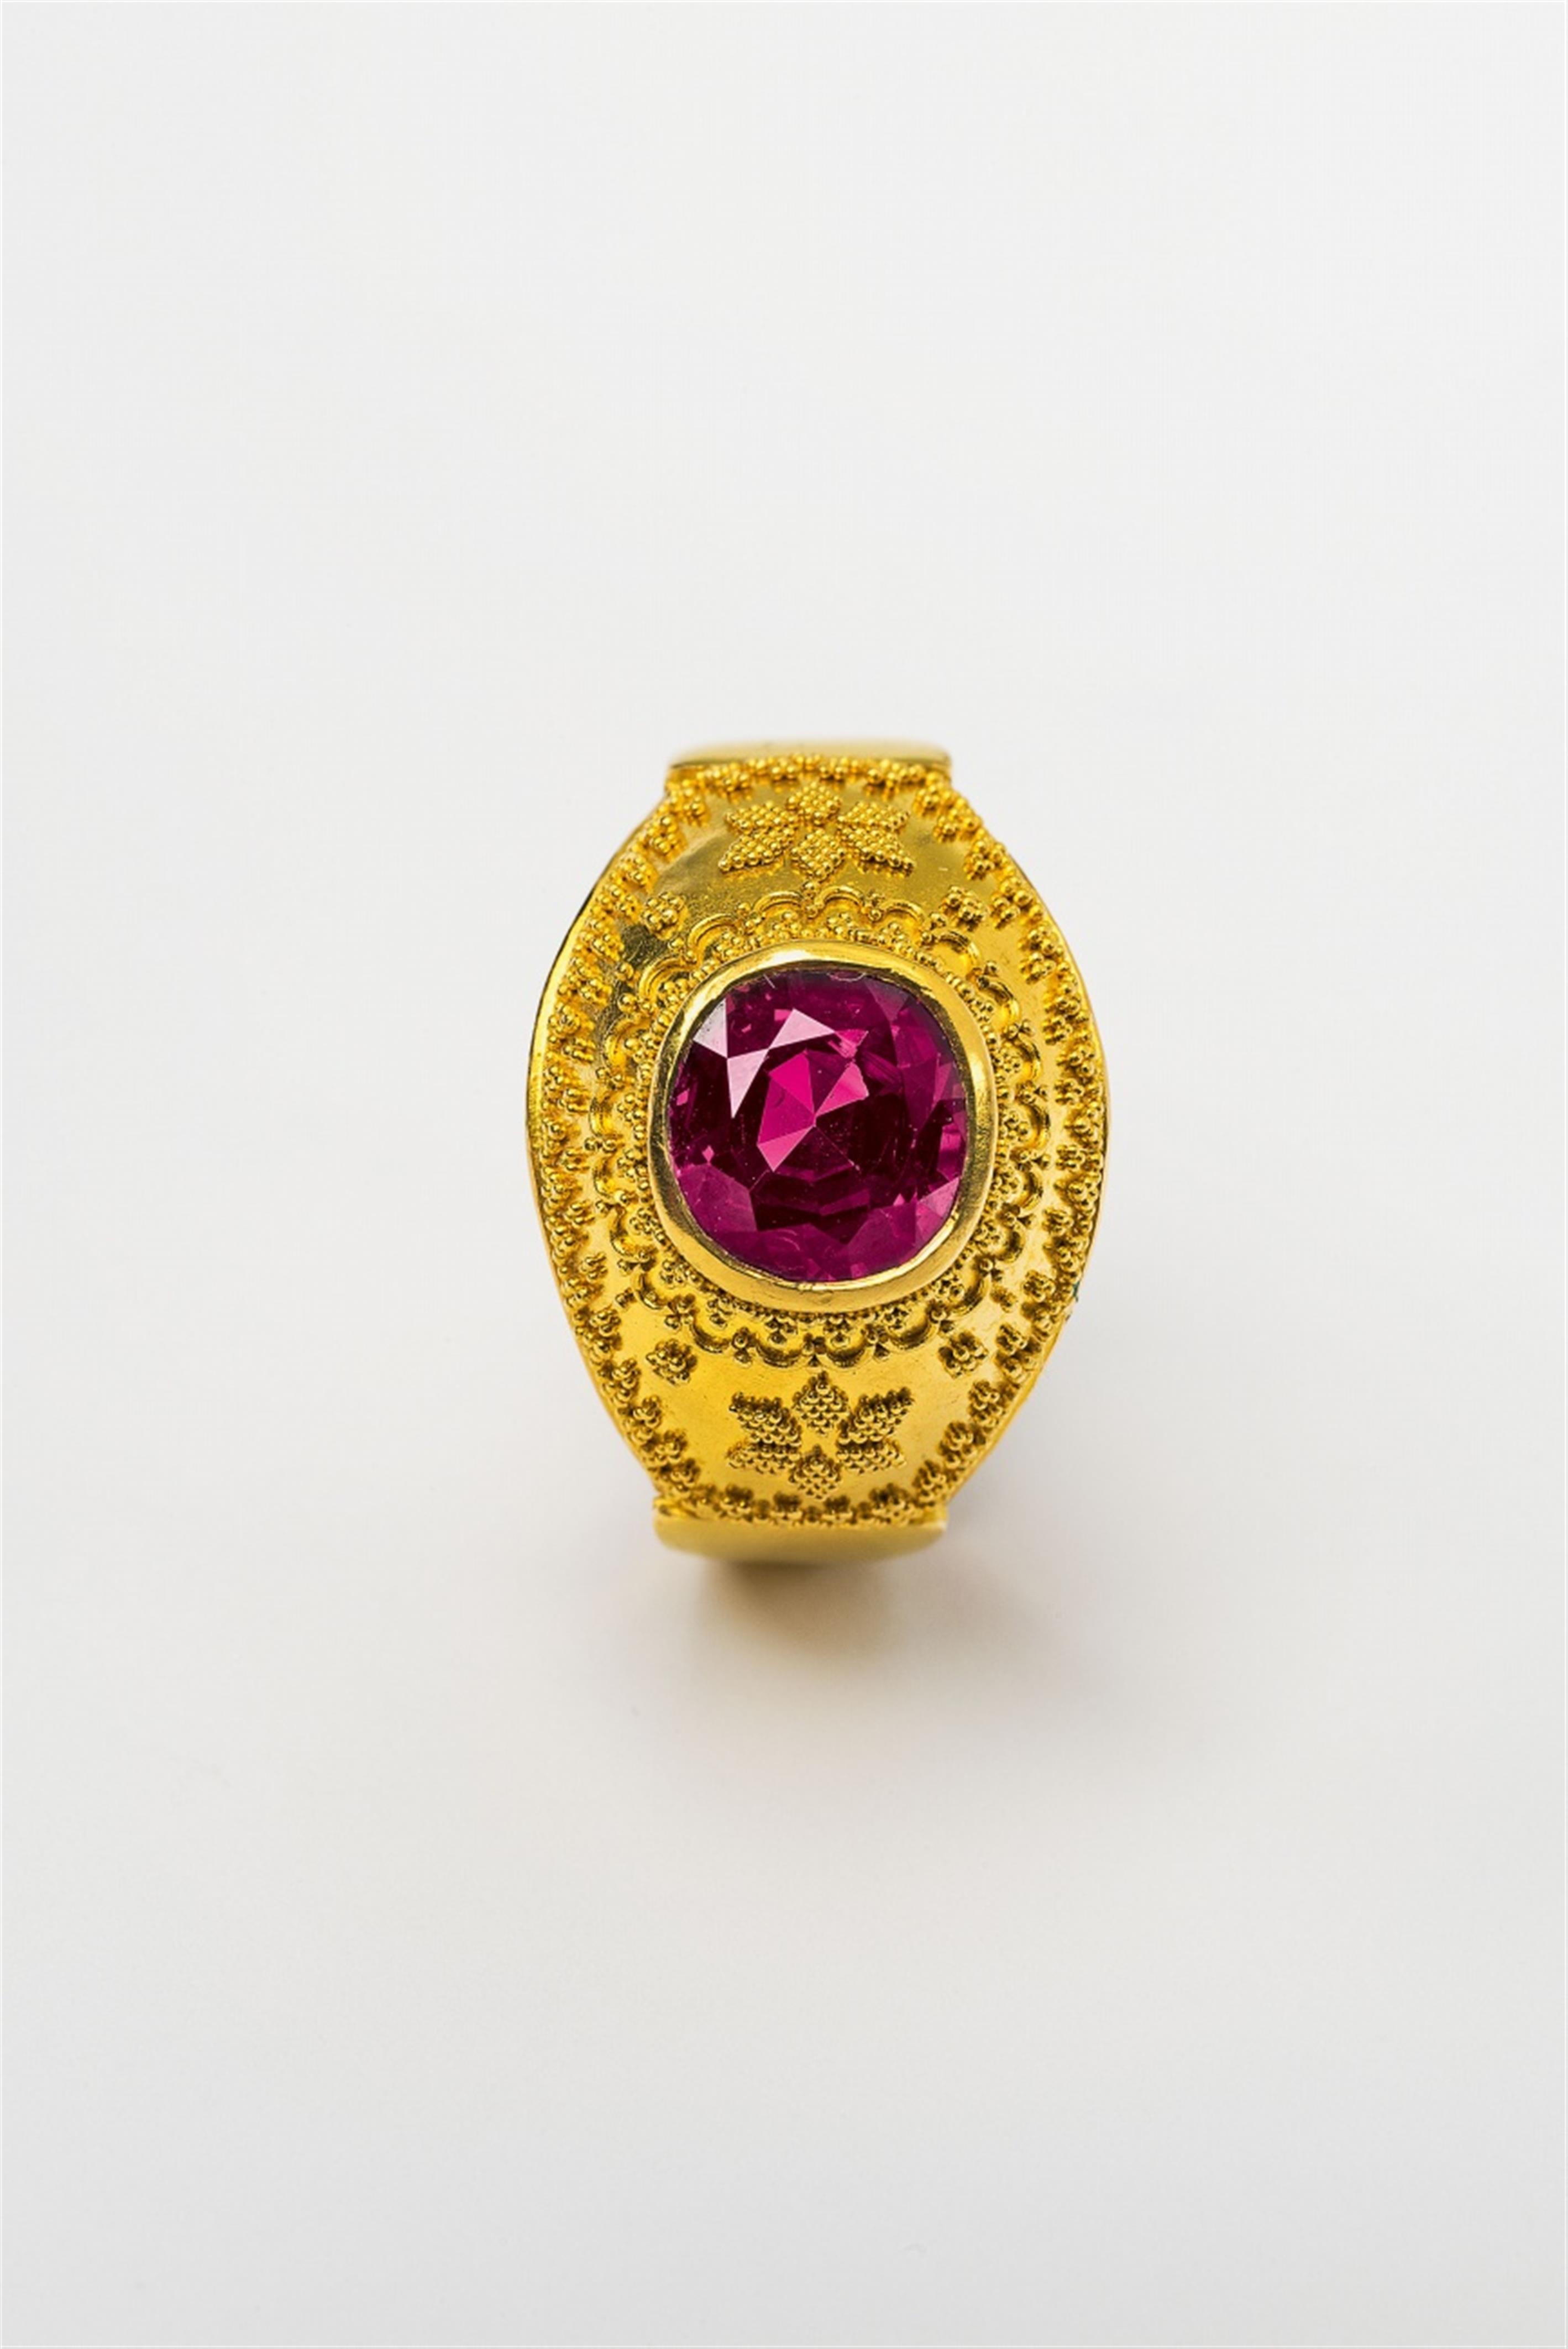 An 18/21k gold and pink sapphire ring by Hans Schott - 